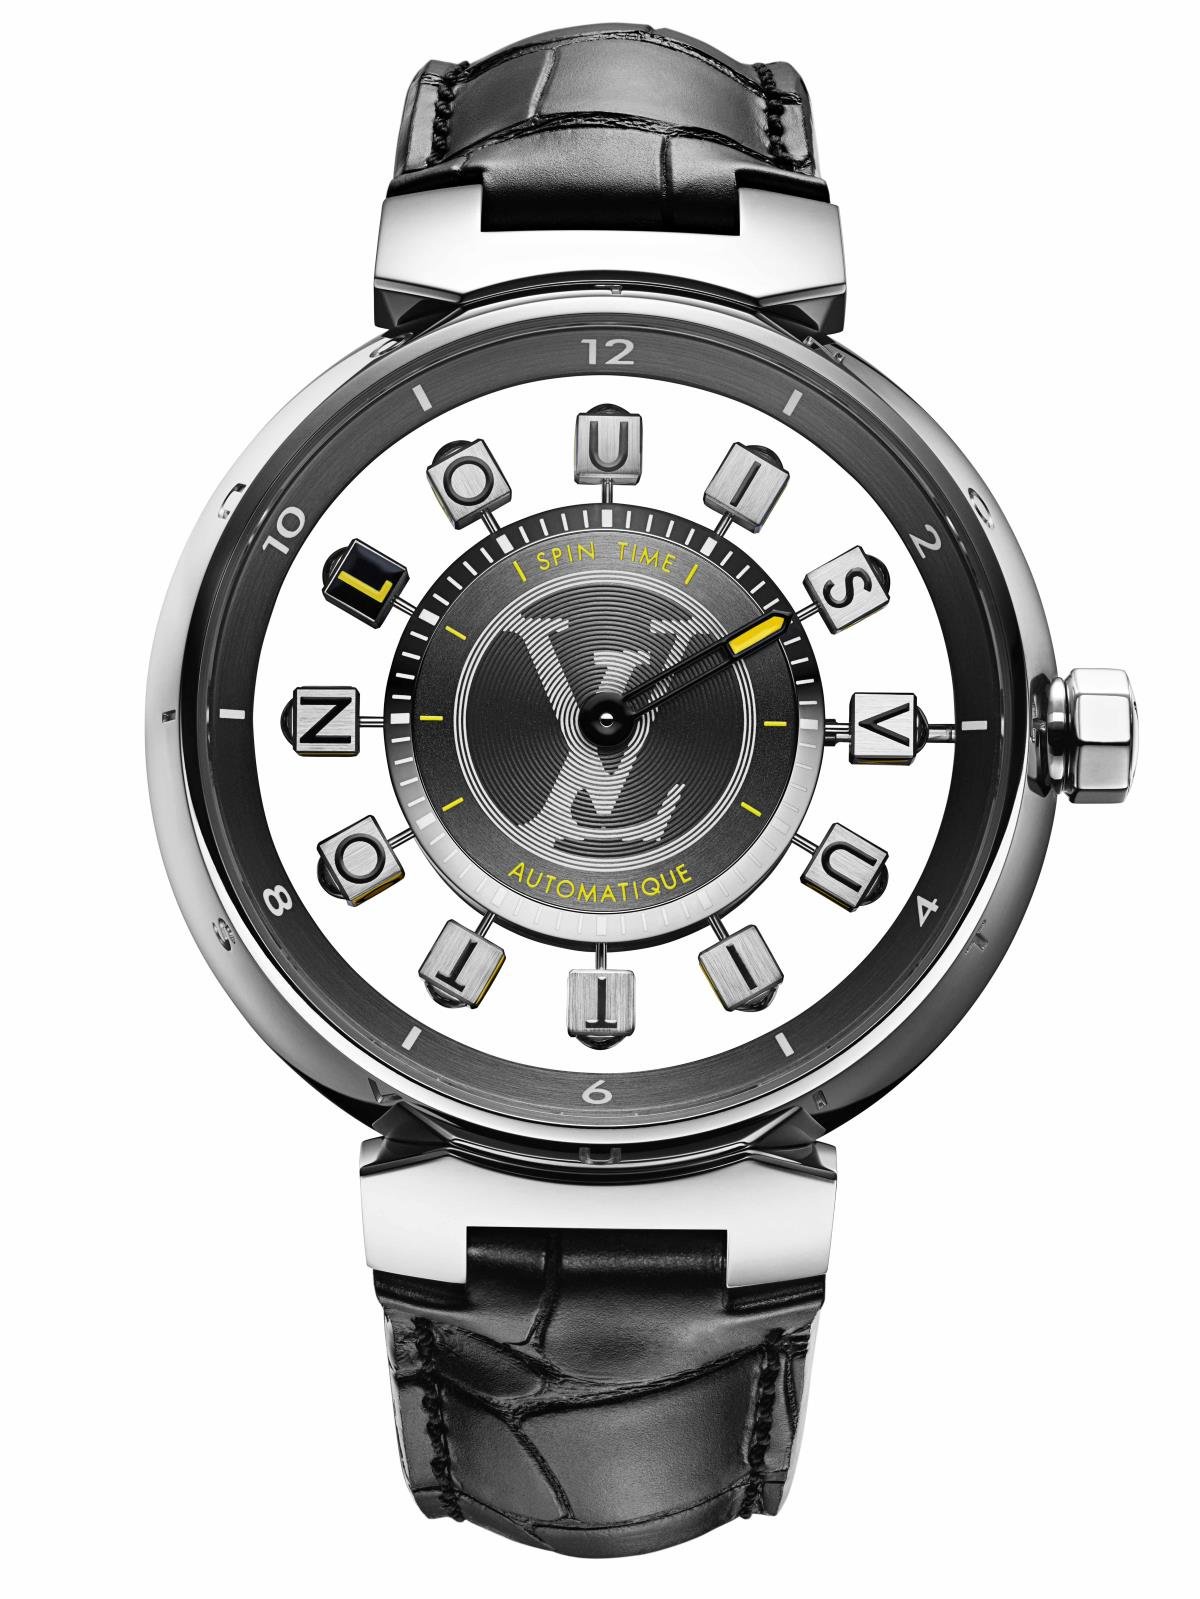 Louis Vuitton Tambour Spin Time Air